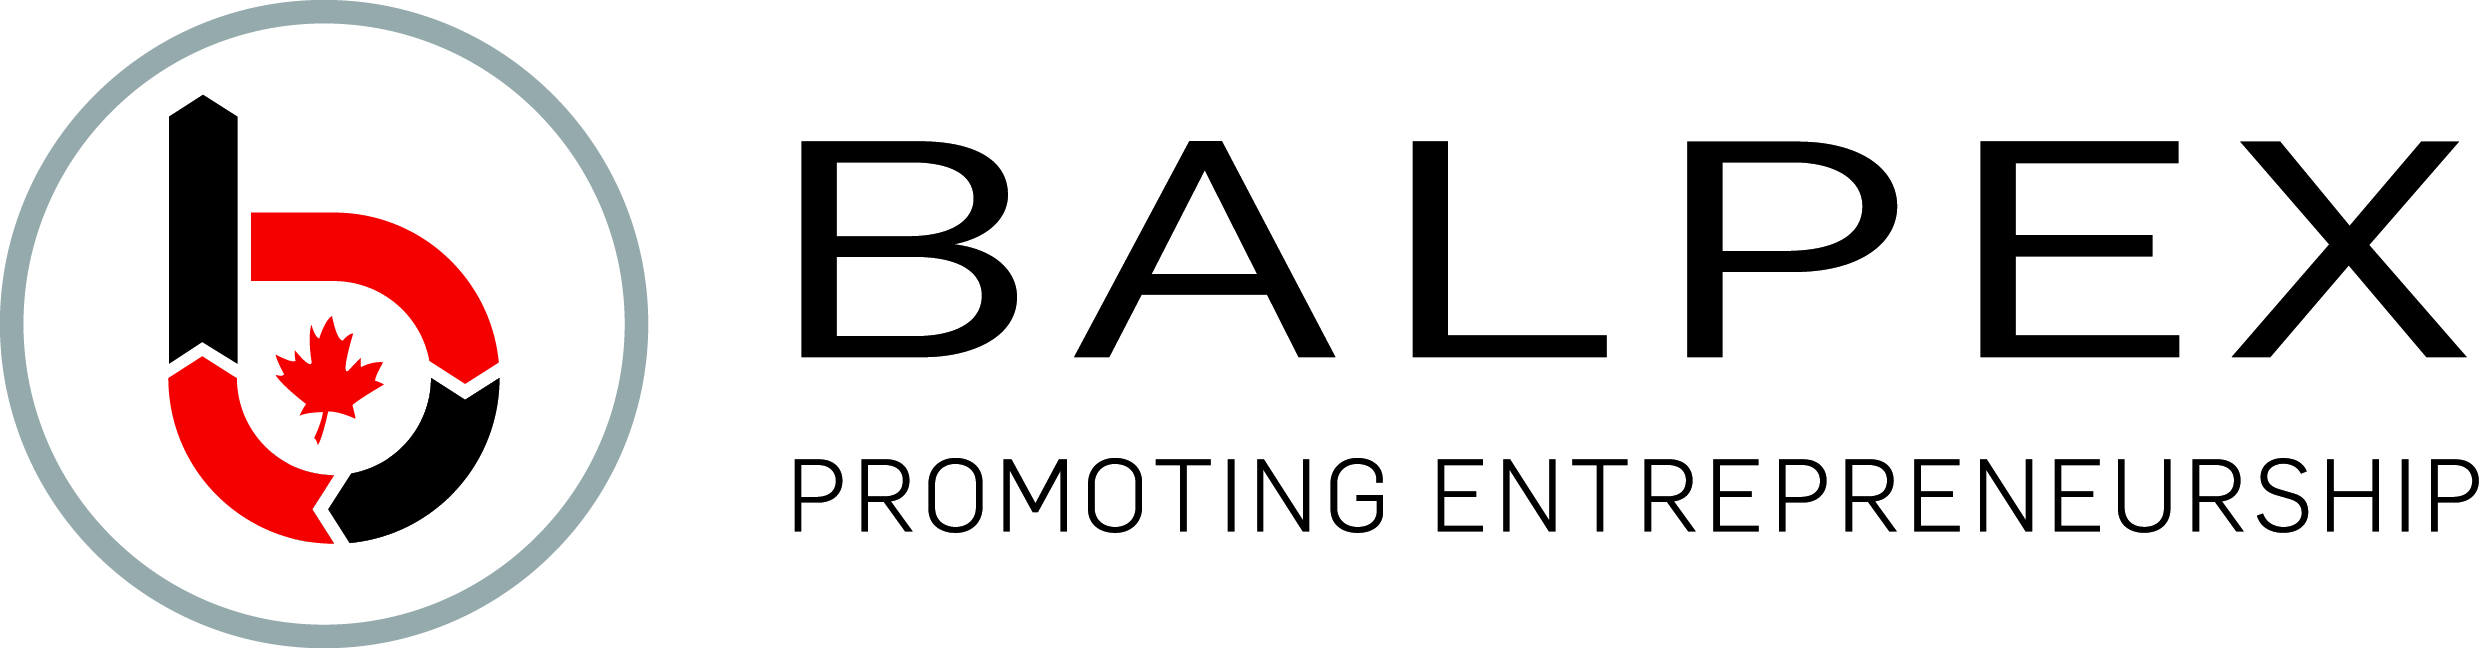 Balpex logo